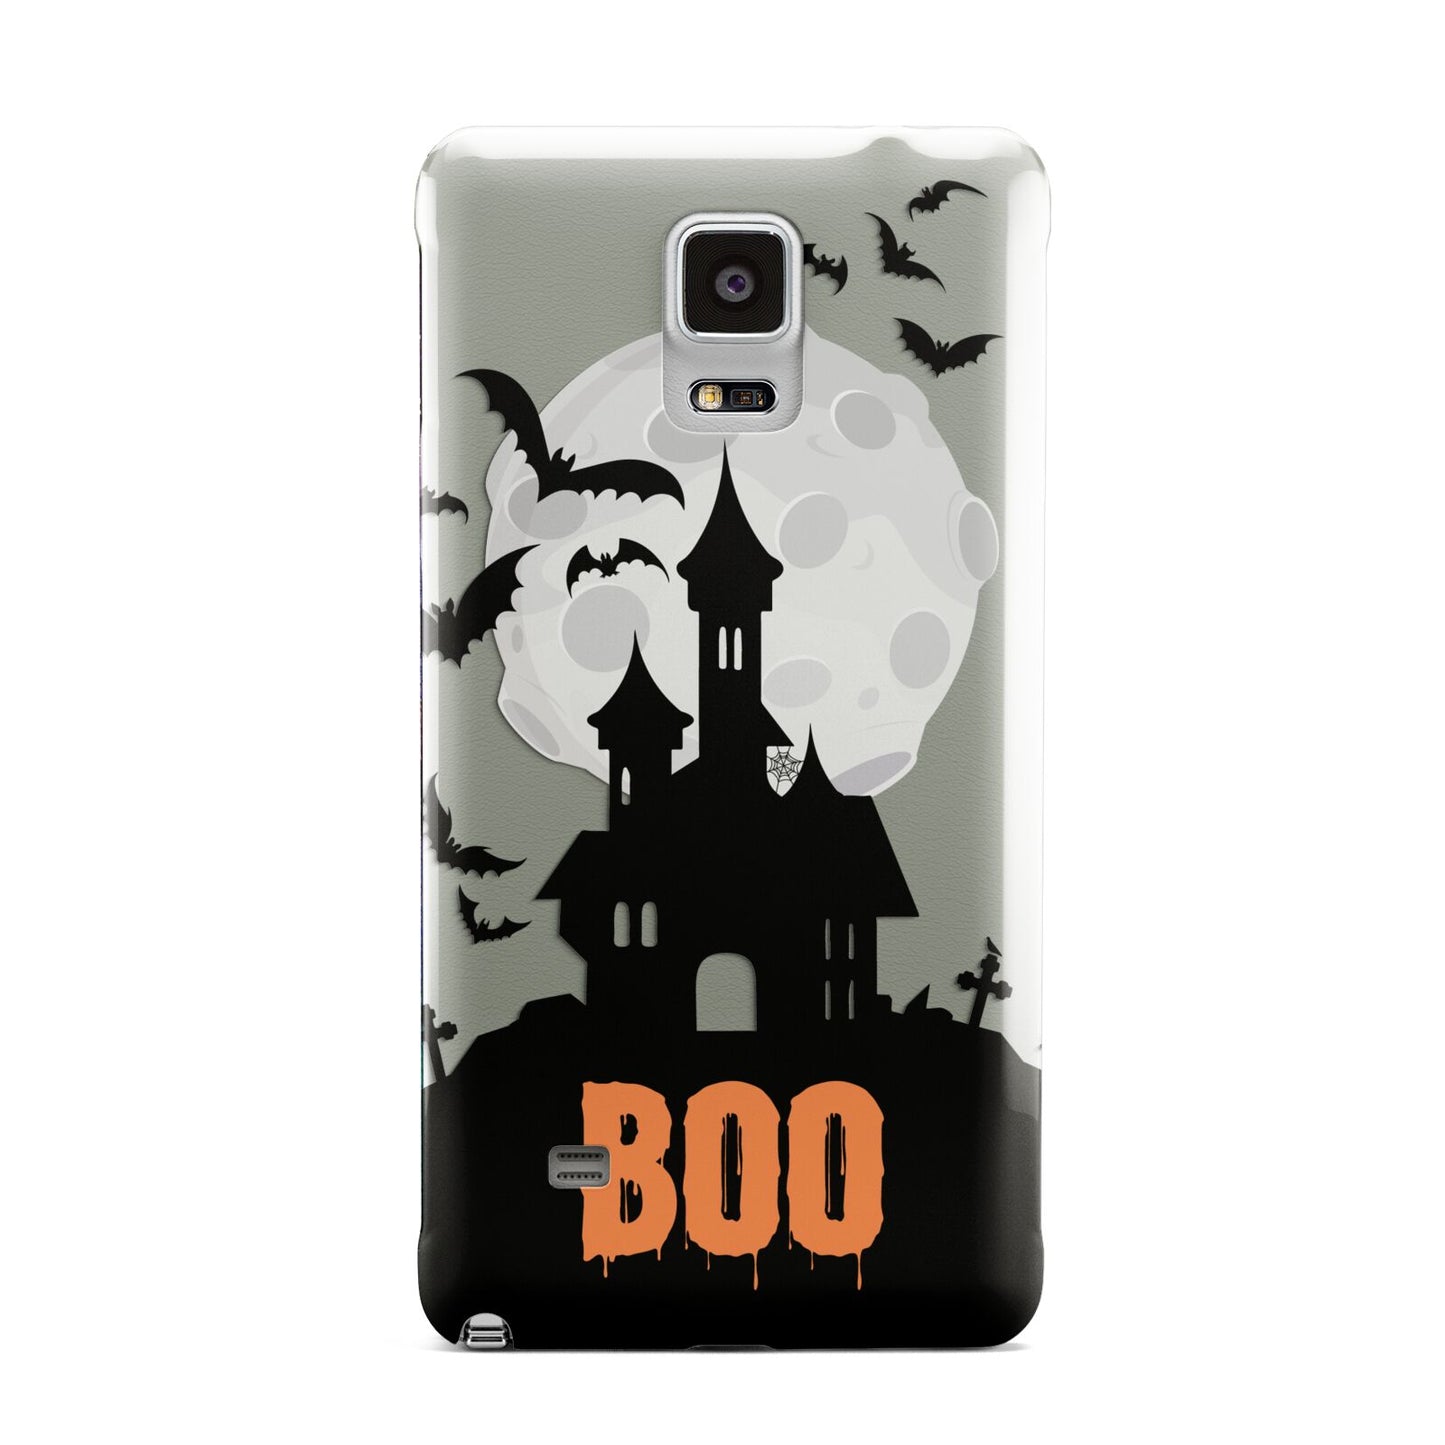 Boo Gothic Black Halloween Samsung Galaxy Note 4 Case